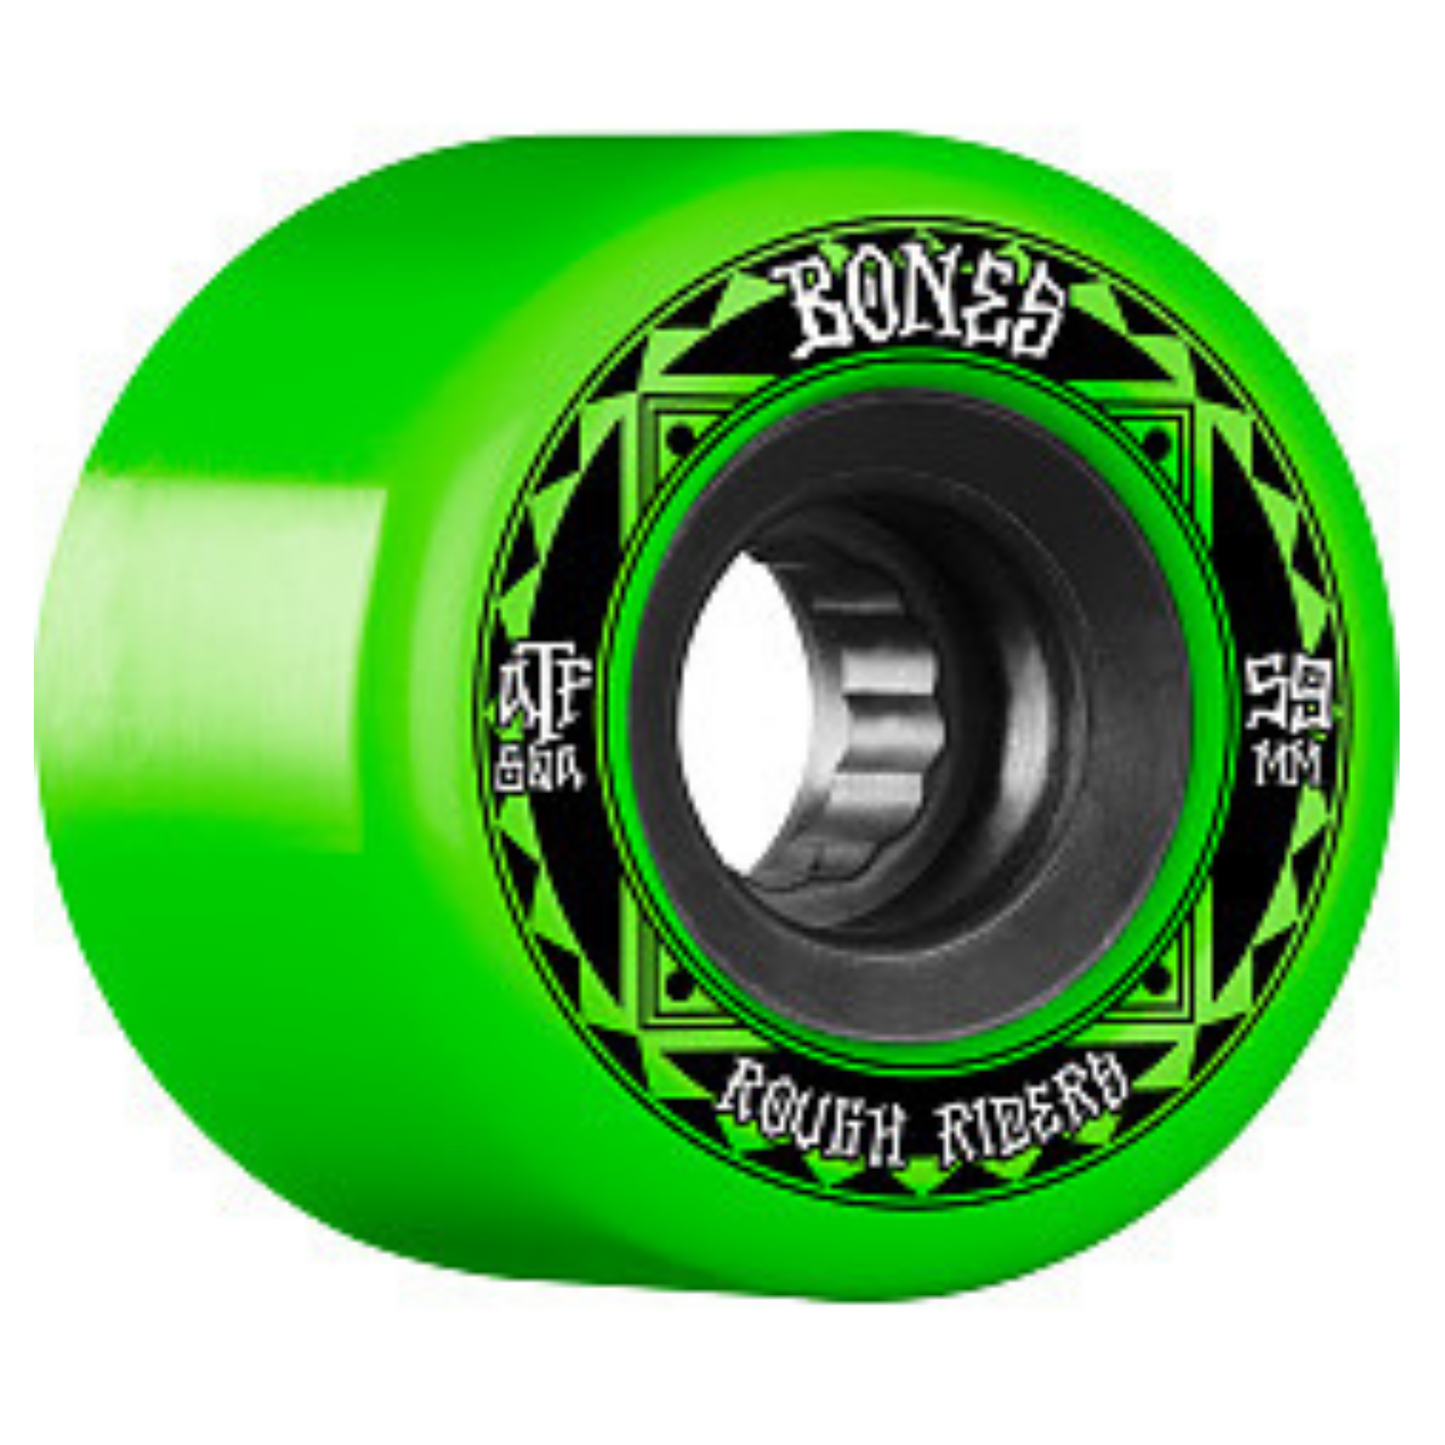 Bones Rough Riders Skateboard Wheels 59mm 80a- Green